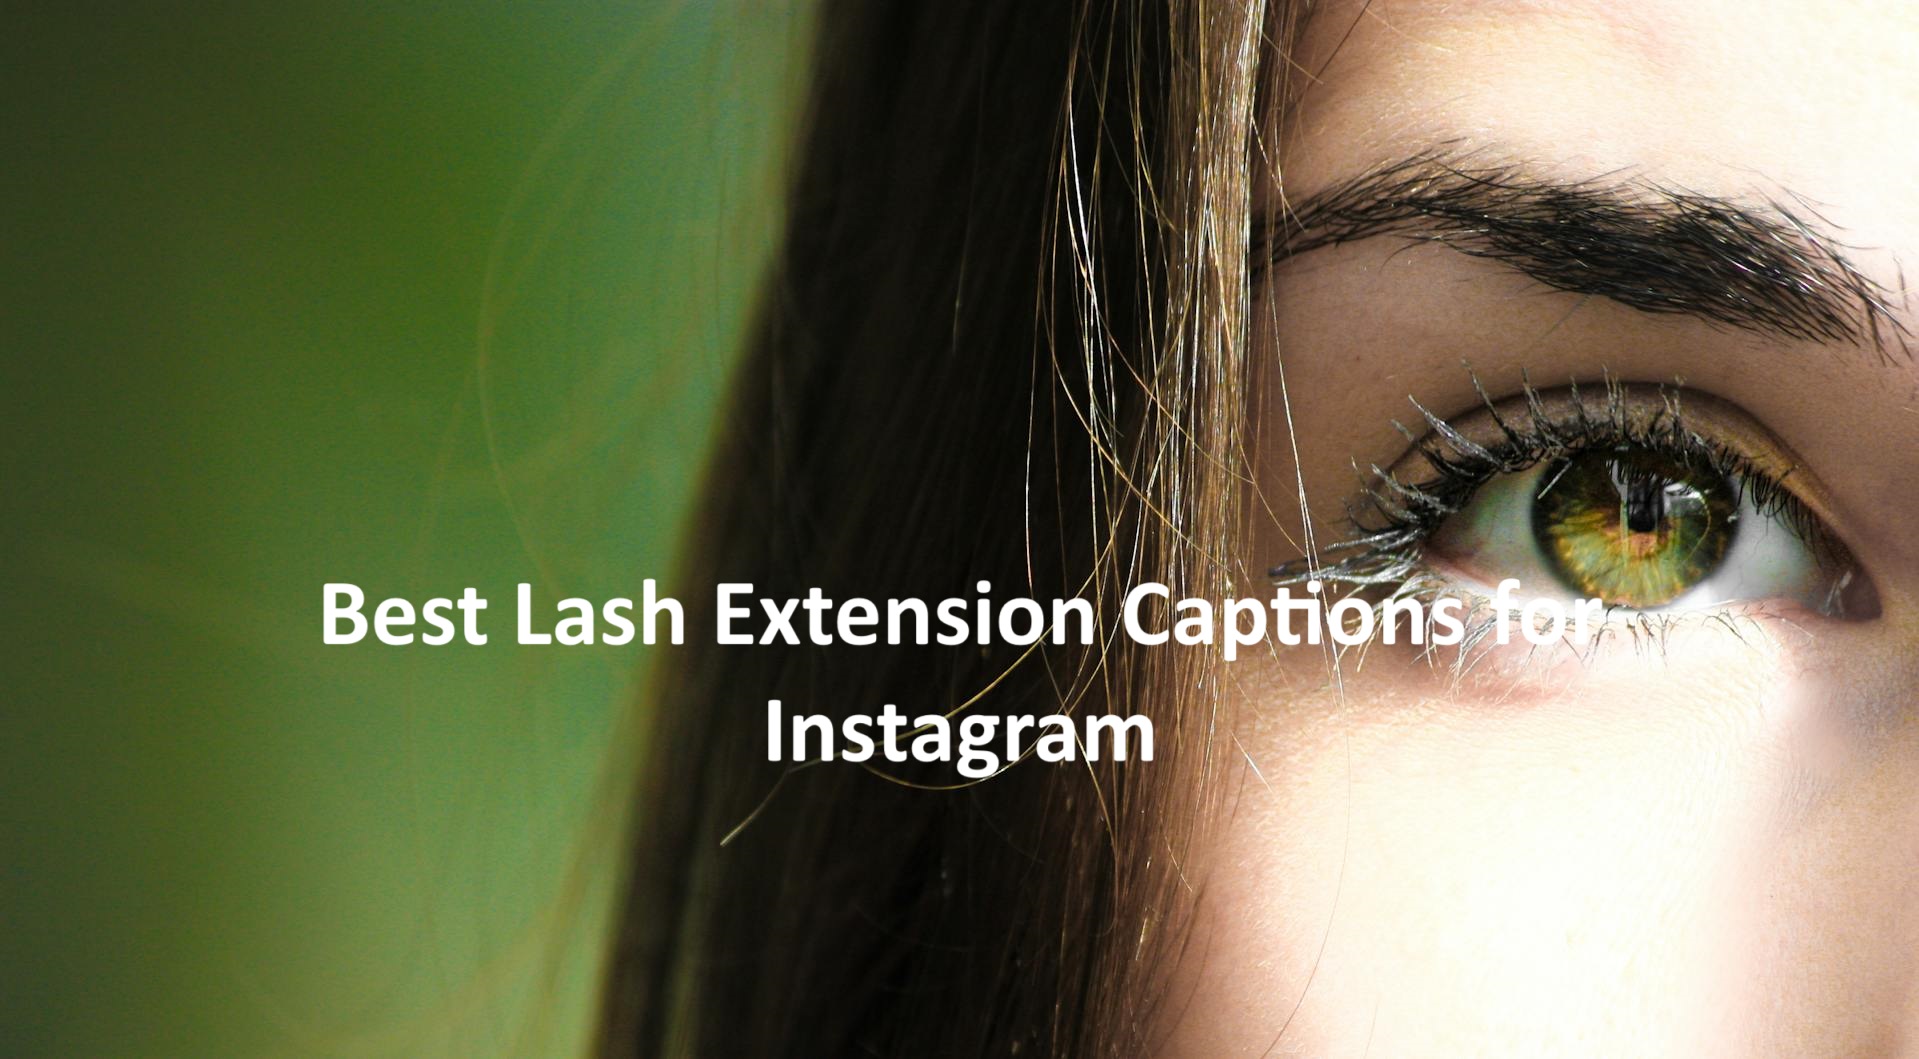 Lash Extension Captions for Instagram